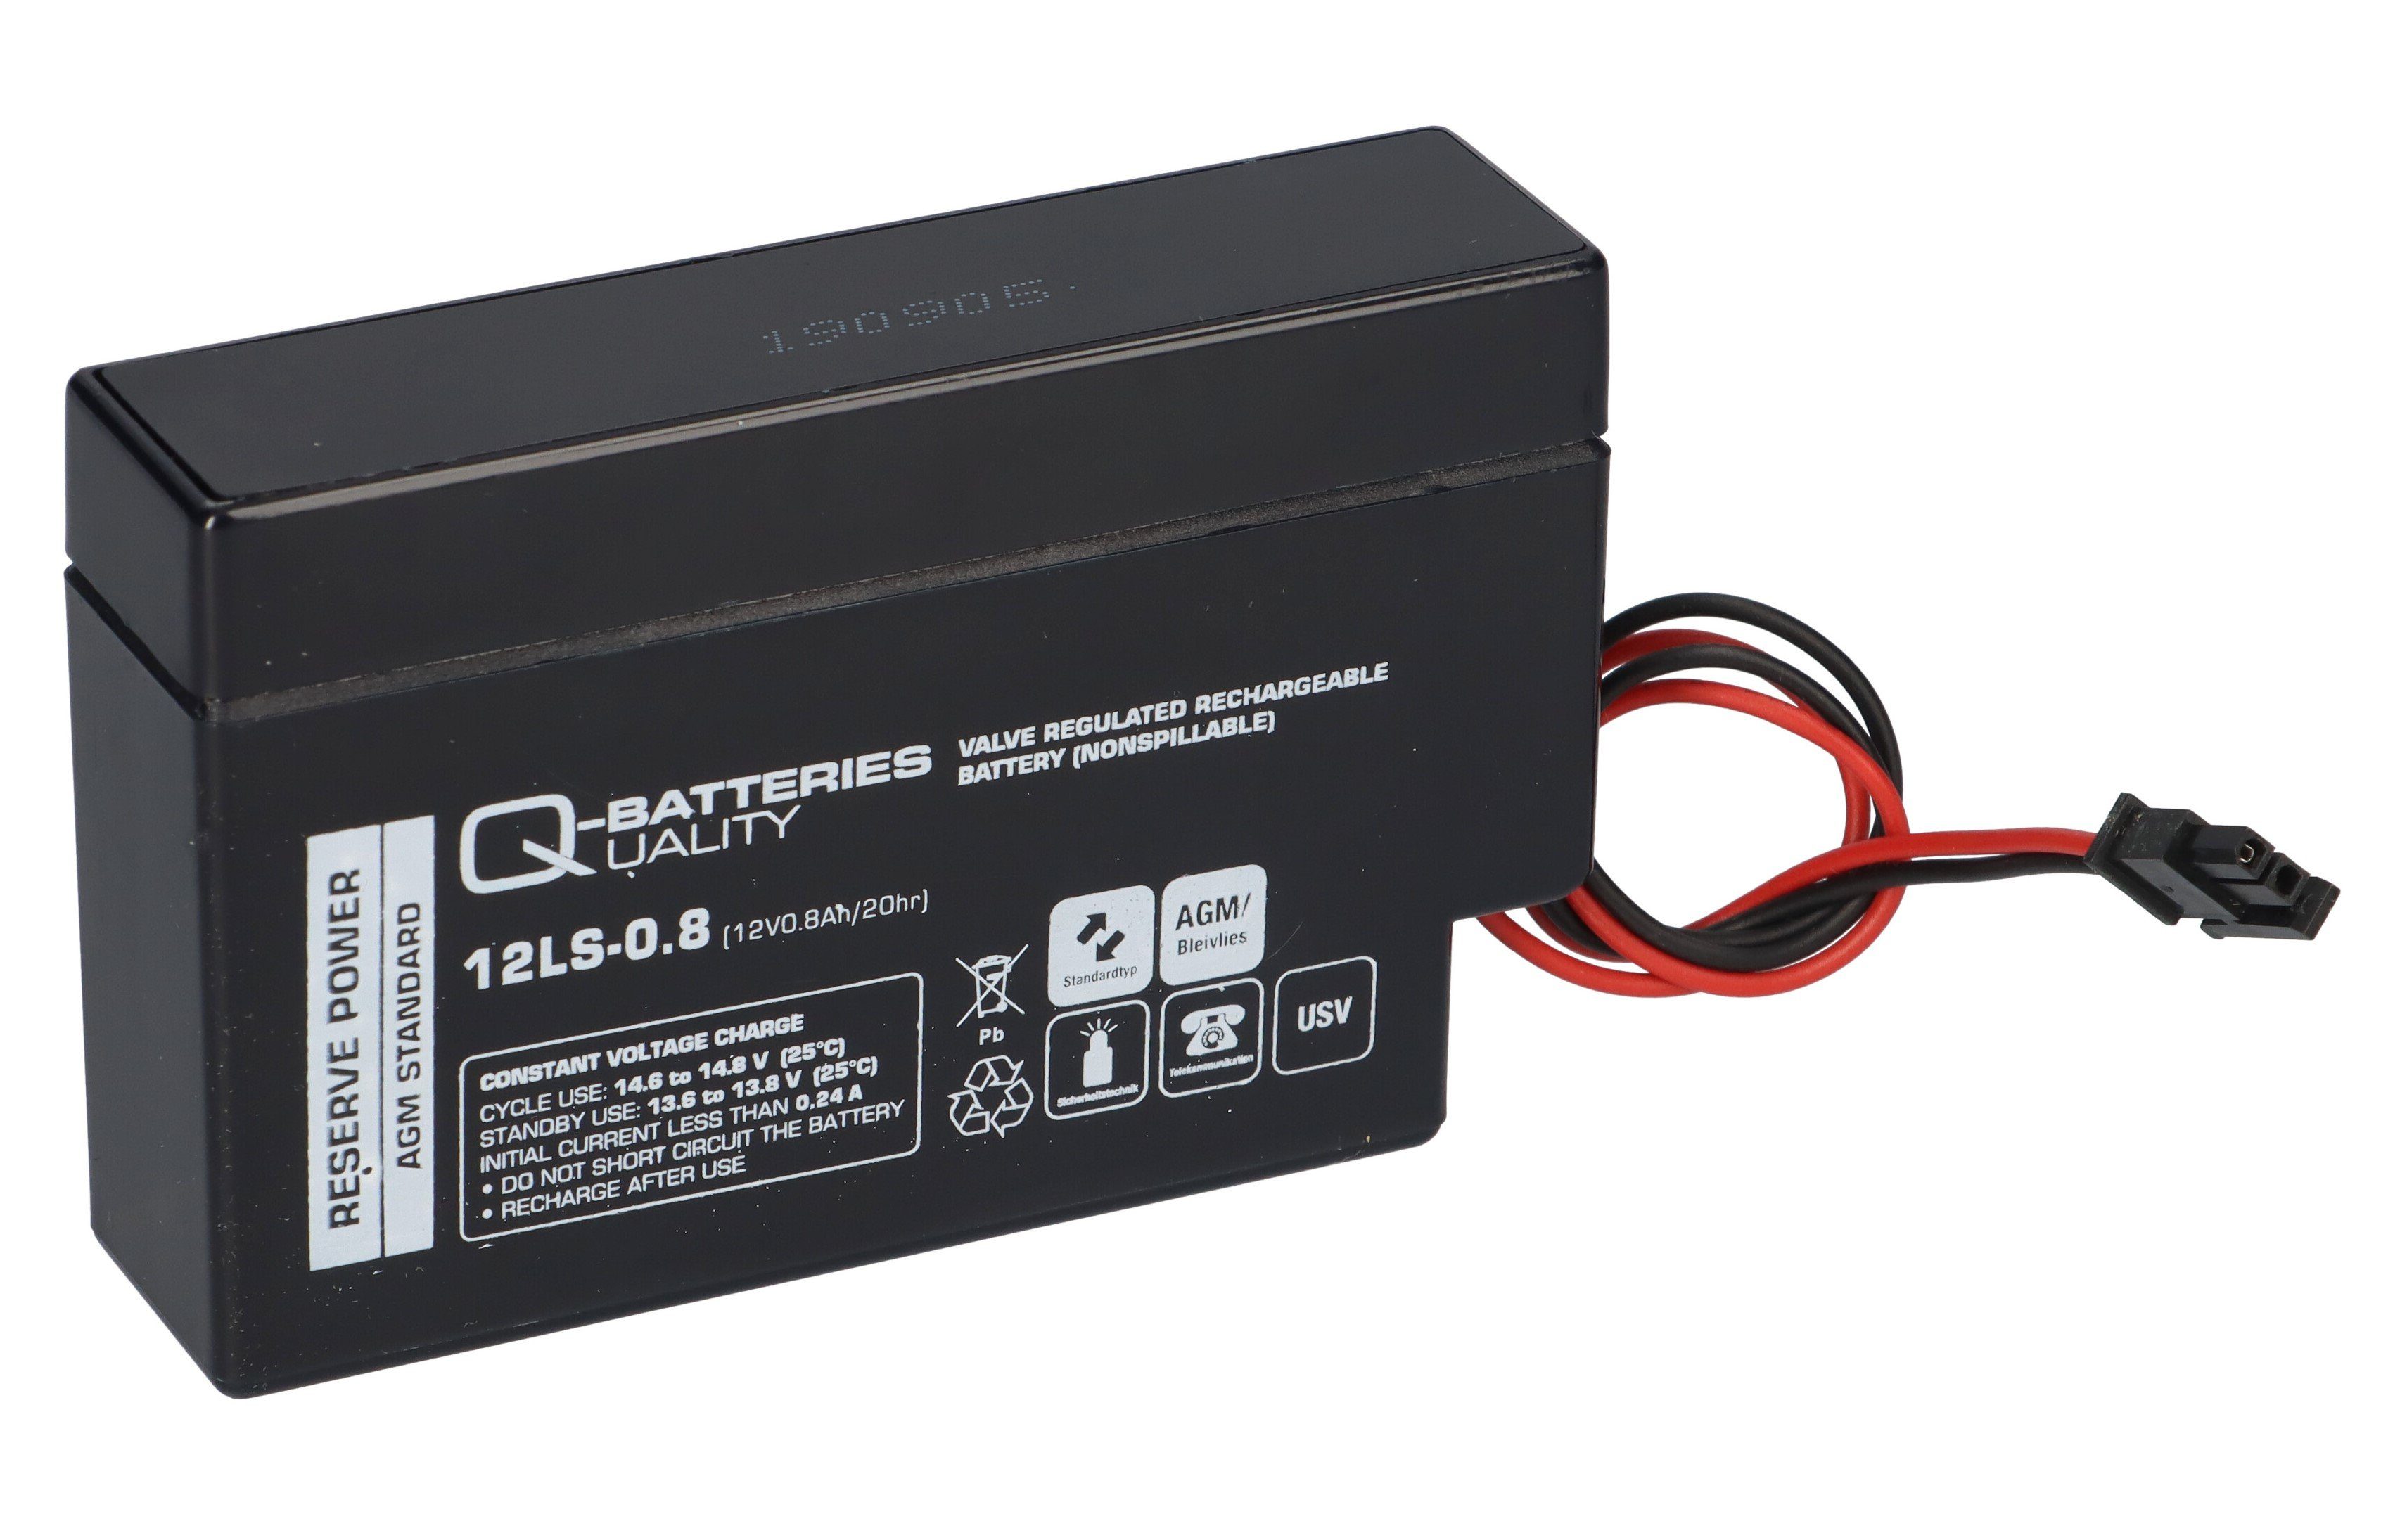 Q-Batteries Heim Haus AGM 12V Bleiakkus & Blei-Vlies 0,8Ah Akku 12LS-0.8 Q-Batteries